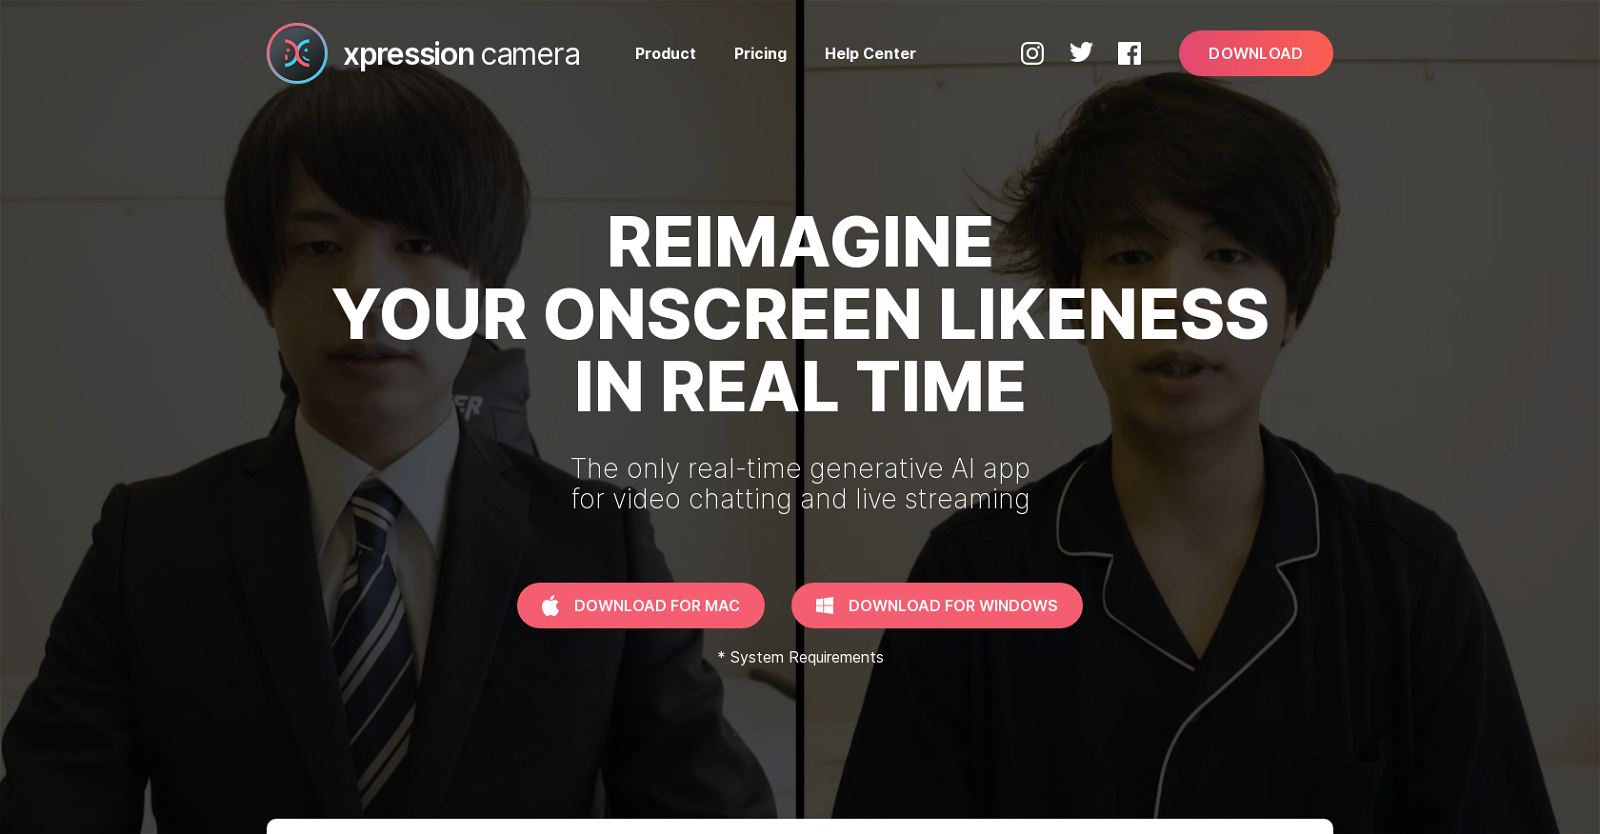 xpression camera 2.0 website